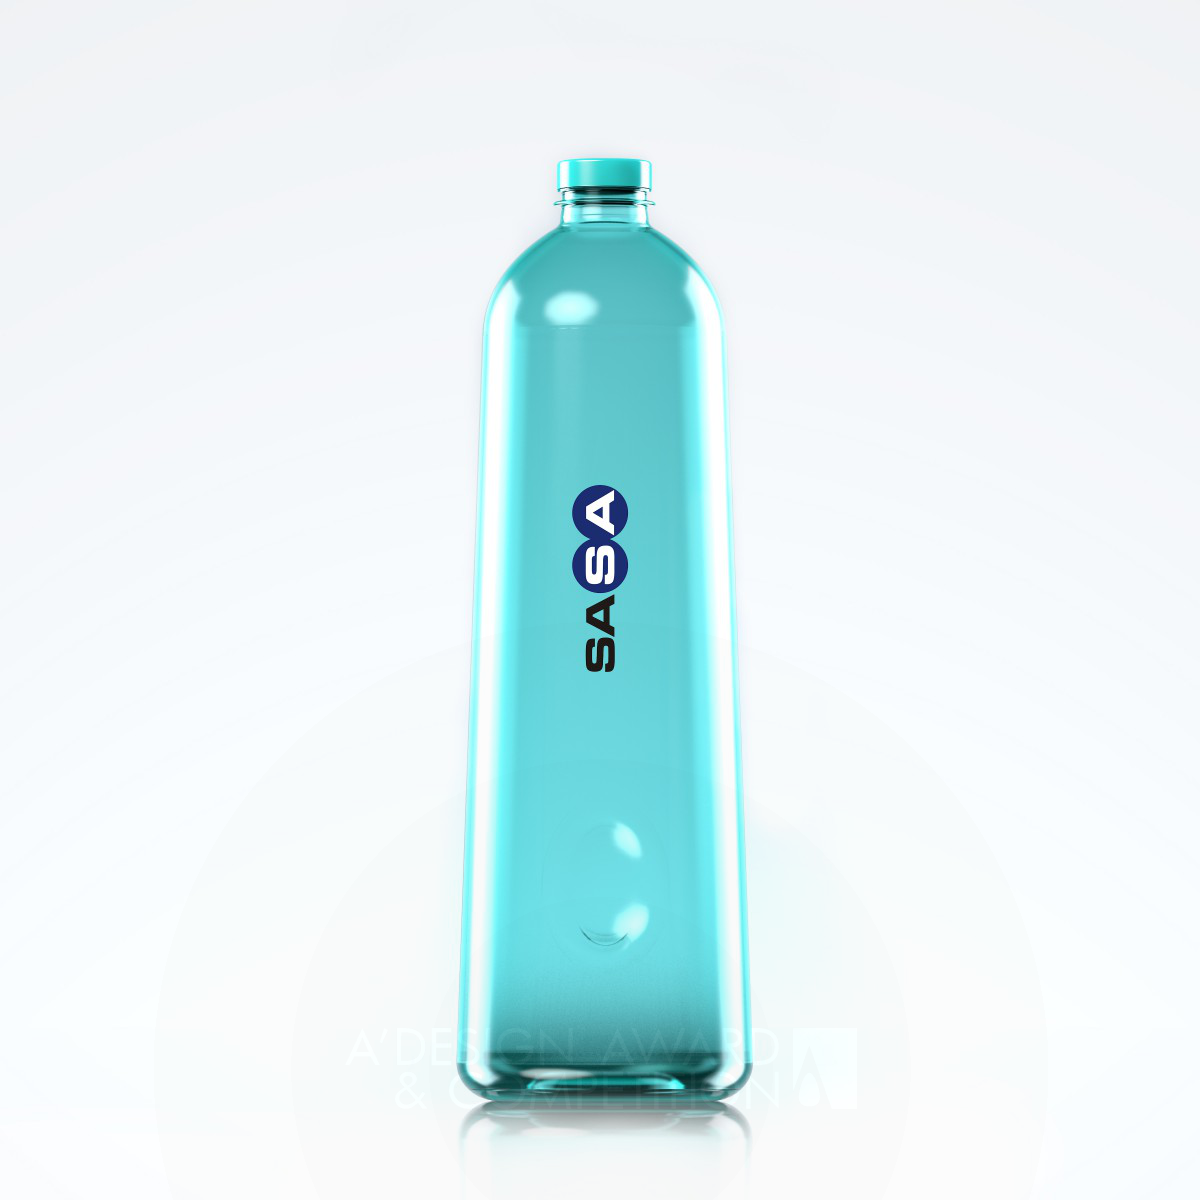 SASA Bottle Water Packaging by Hakan Gürsu Bronze Packaging Design Award Winner 2015 